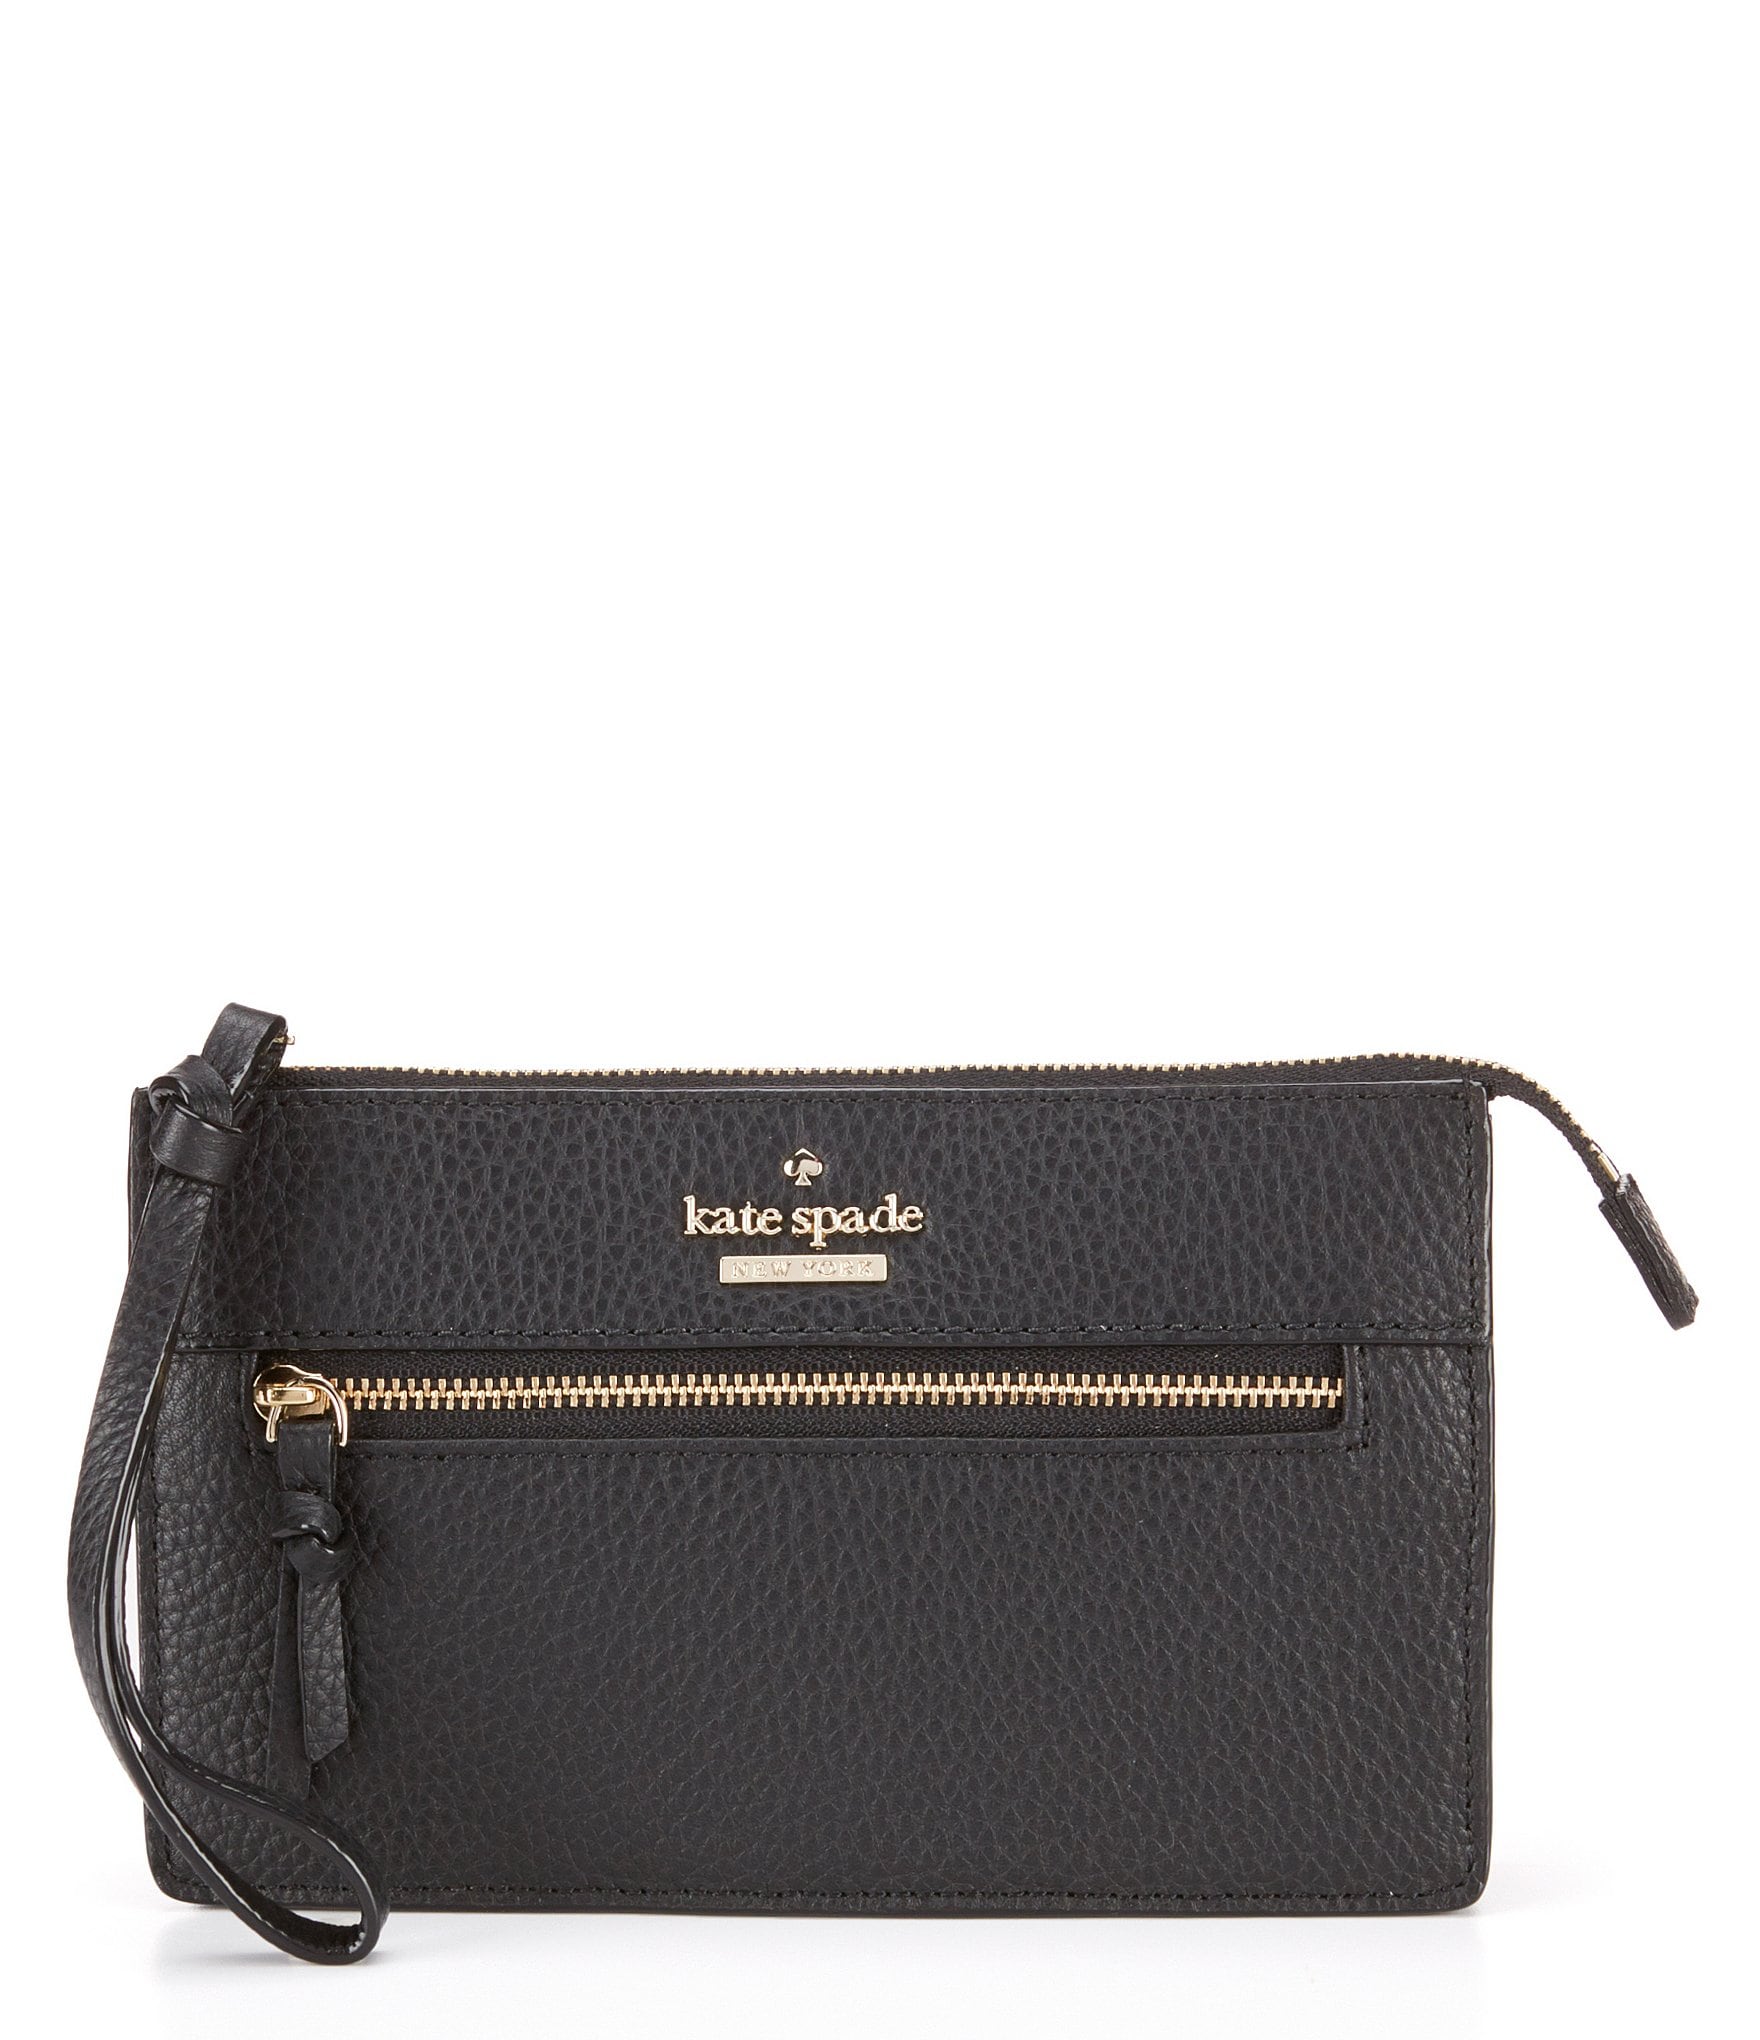 Louis Vuitton Handbags In Allen Tx | SEMA Data Co-op